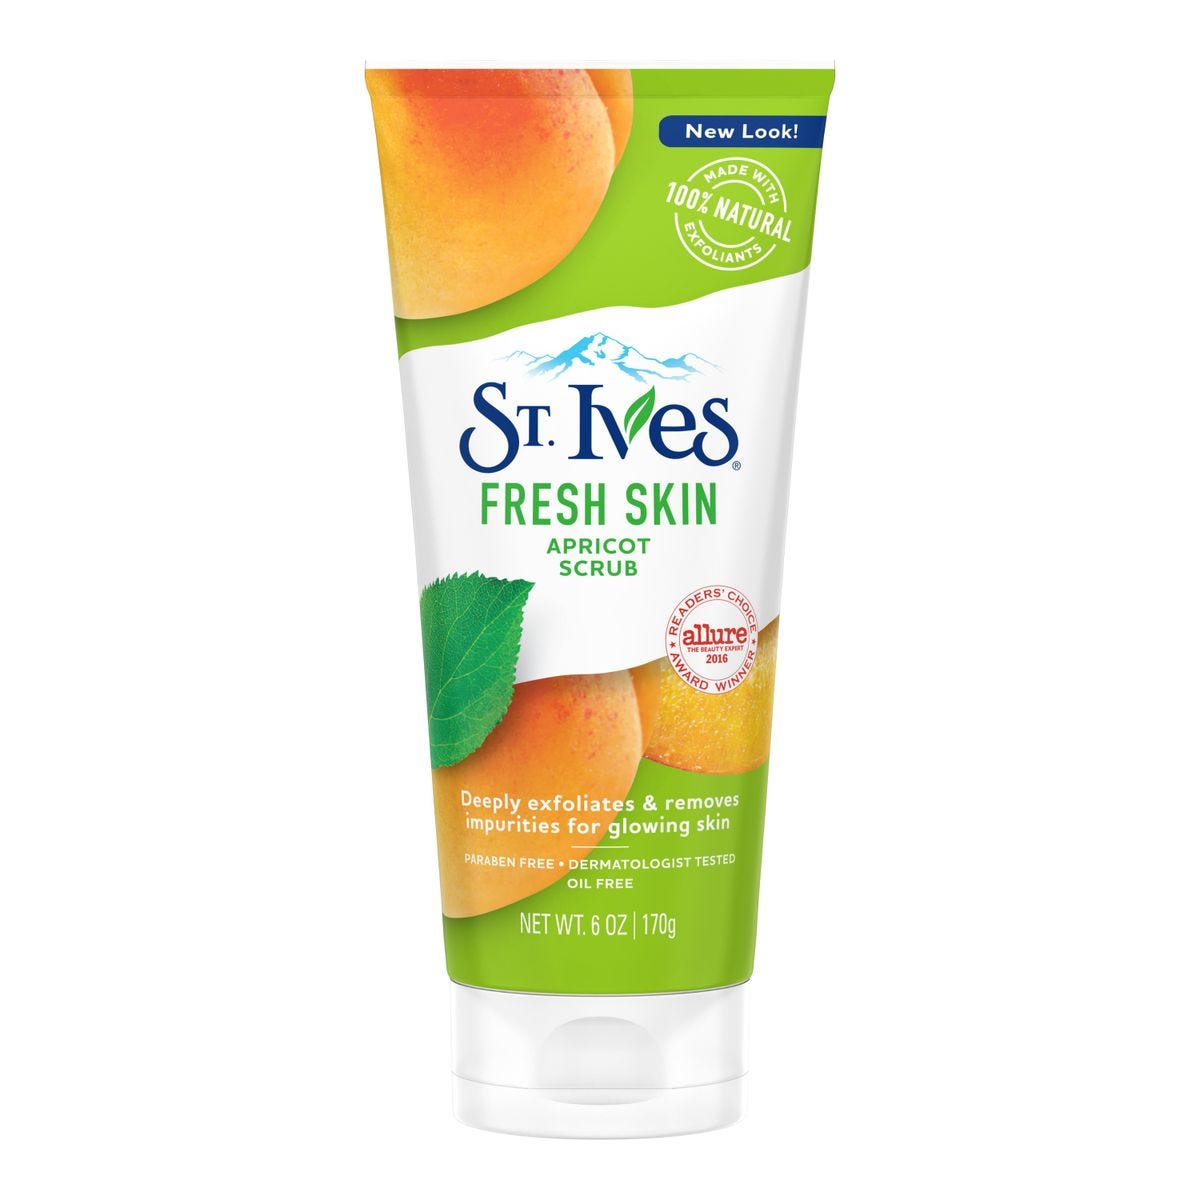 St. Ives Fresh Skin Face Scrub Apricot 6 oz - Walmart.com - Walmart.com